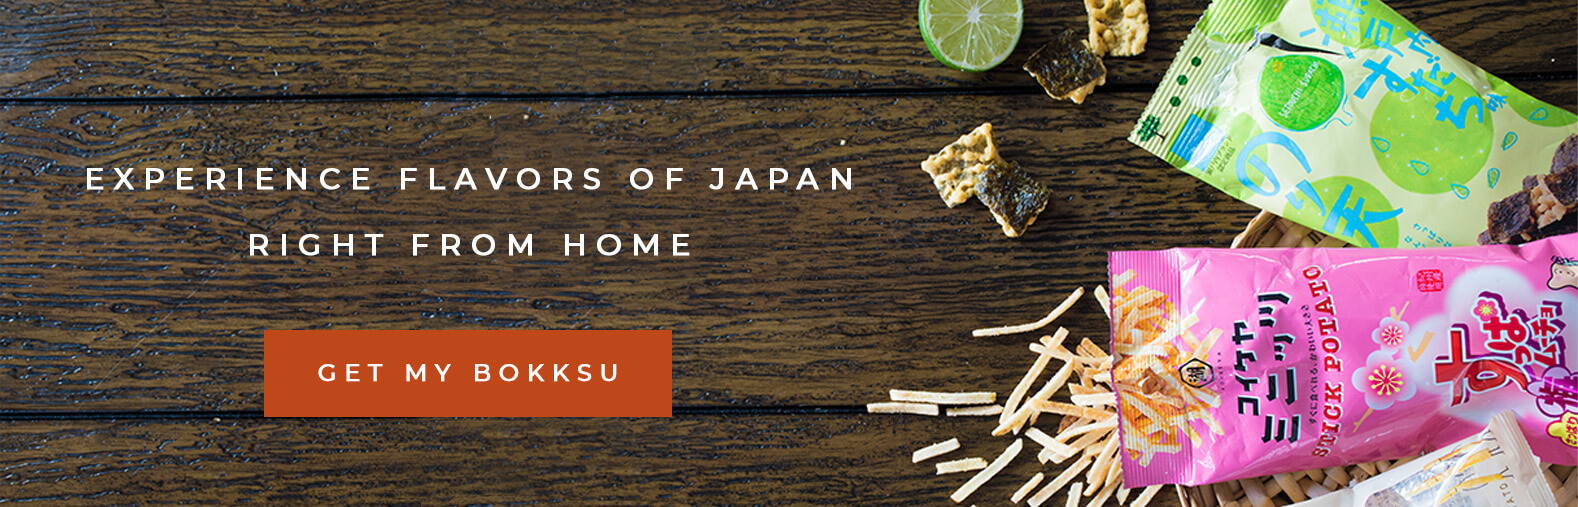 join bokksu japanese snack subscription box service today